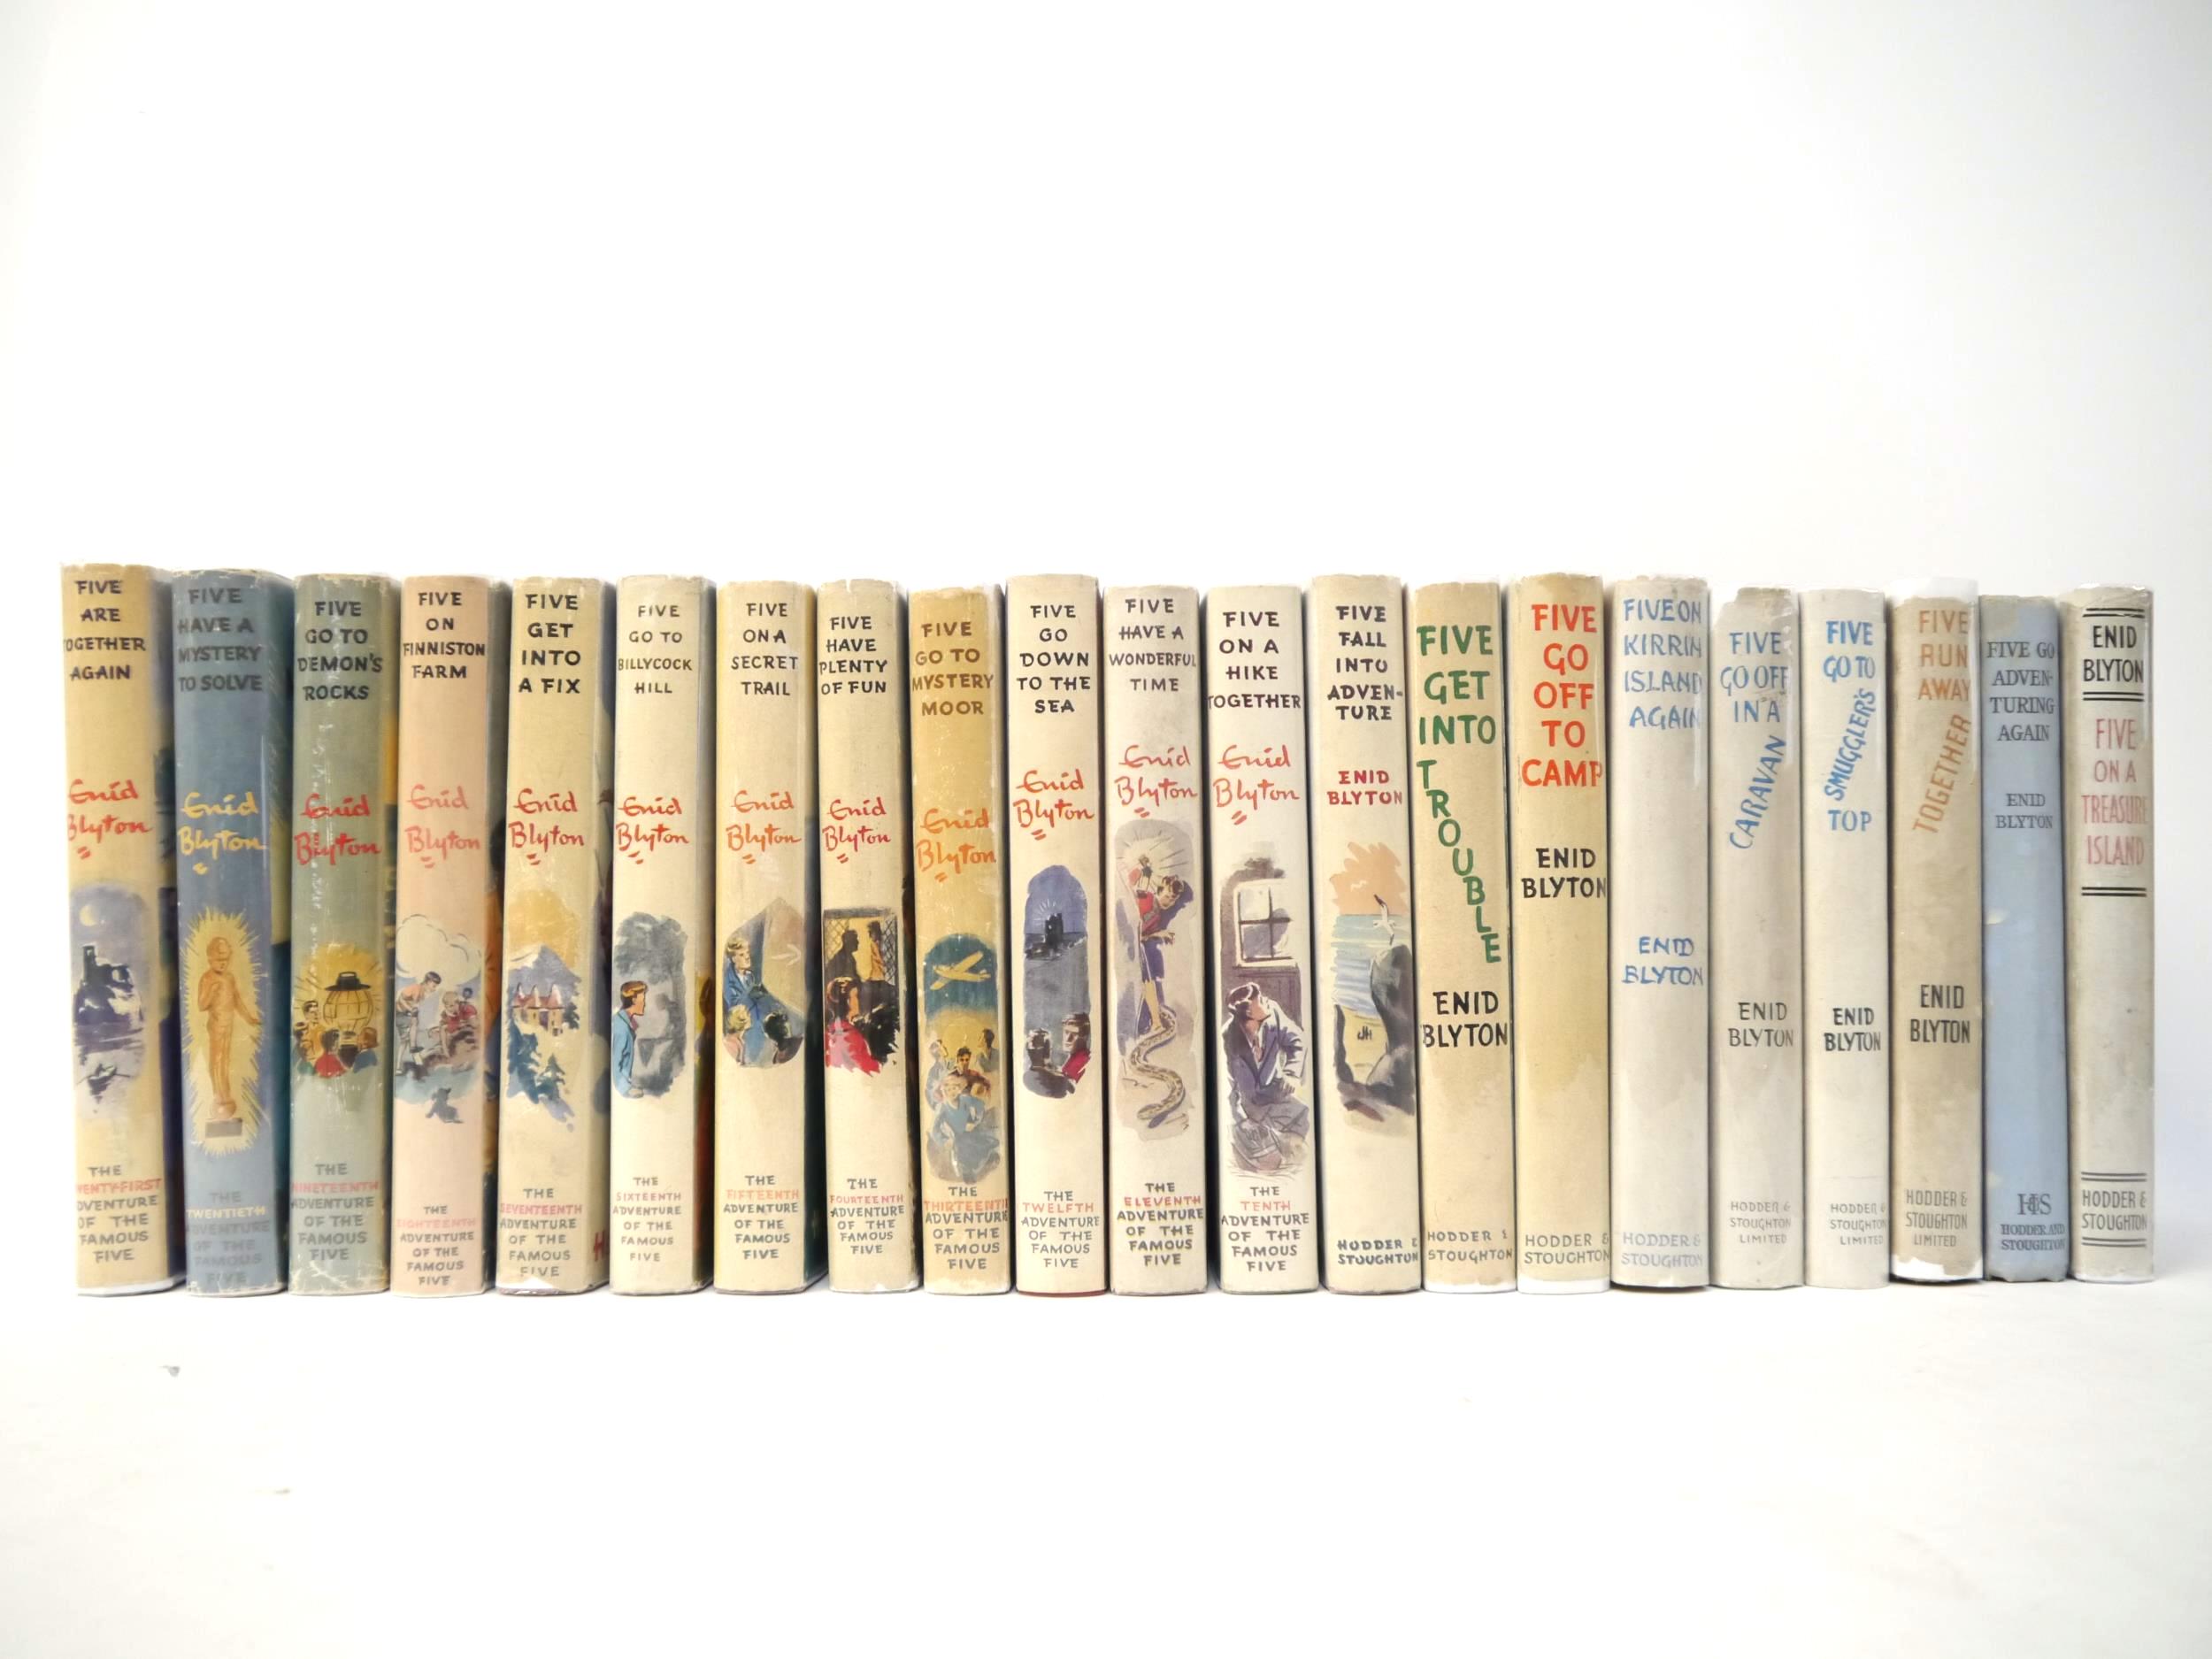 Enid Blyton, 'Famous Five', complete set of the 21 children's detective series novels, all 1st